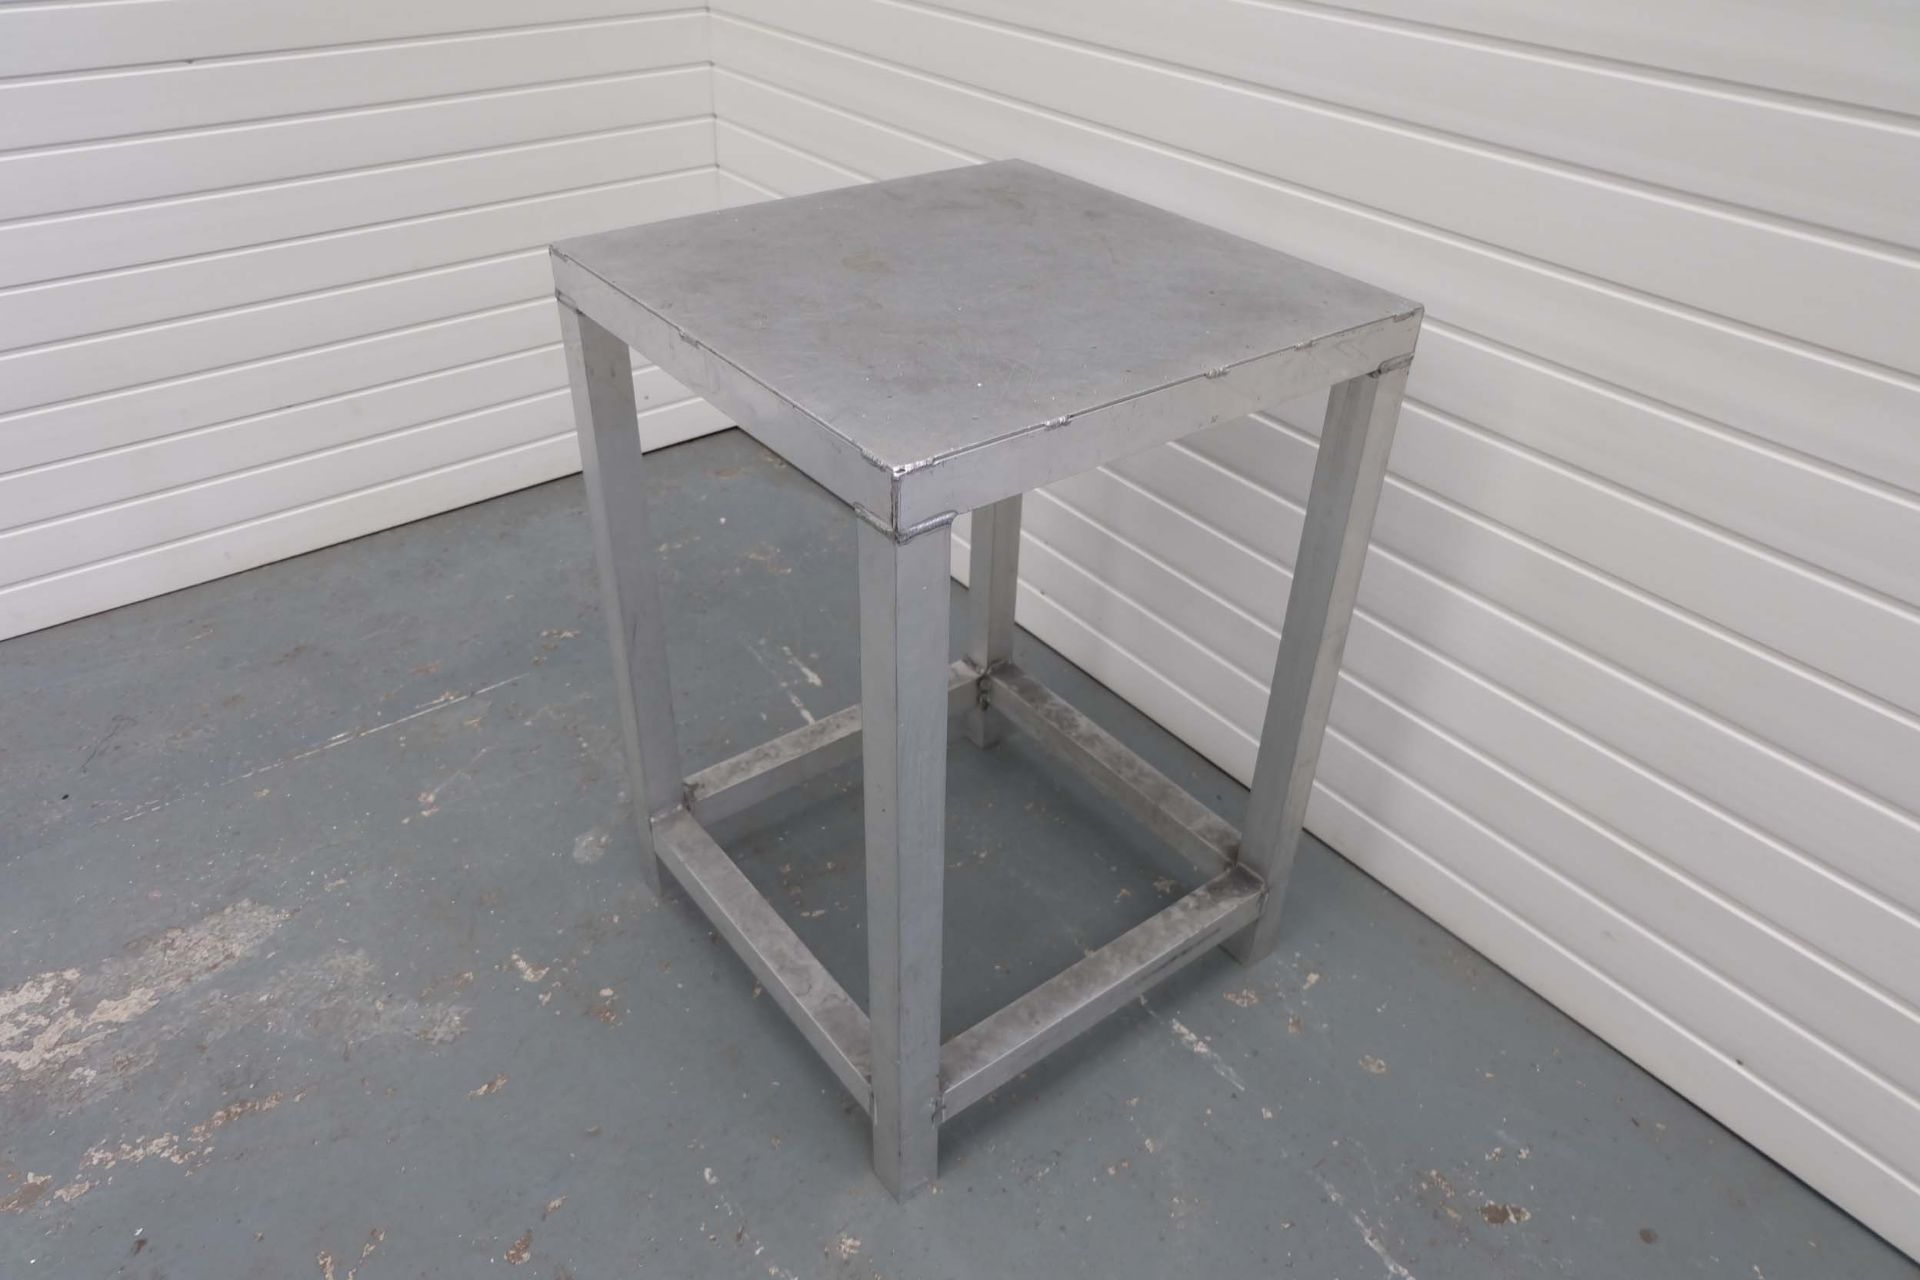 Aluminium Workbench With Aluminium Top. 24" X 24" x 53" High. - Image 2 of 3